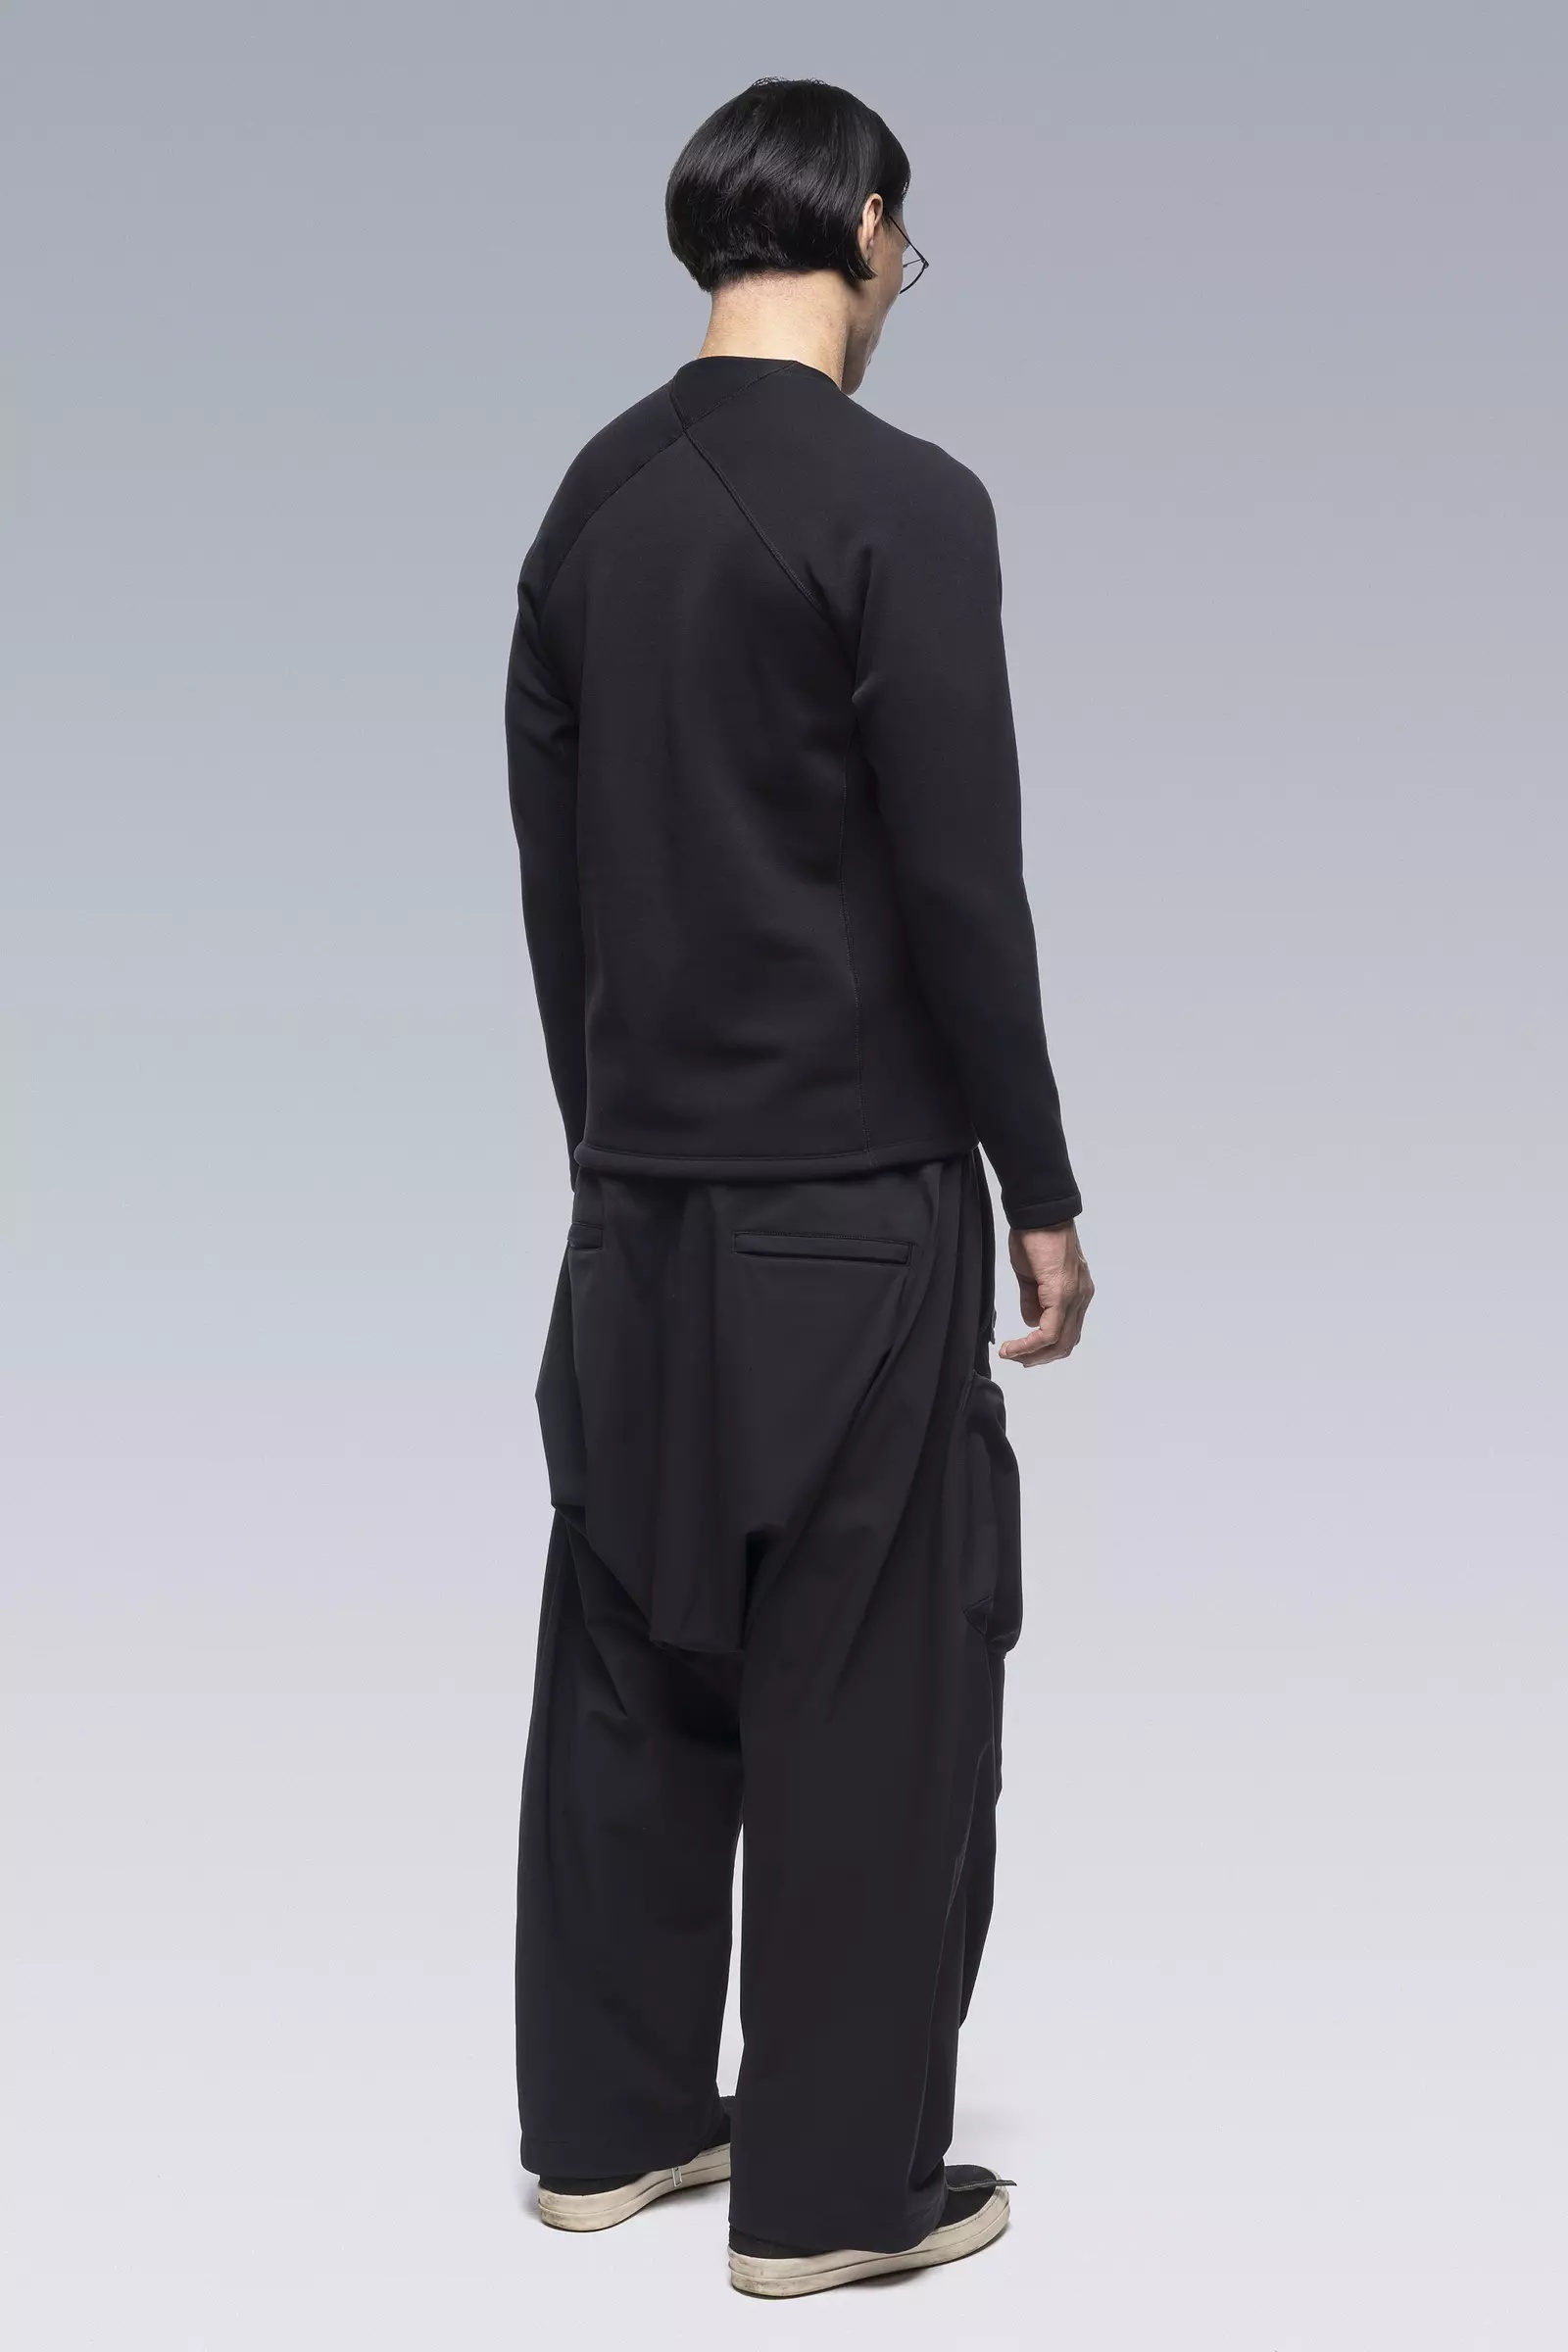 S27-PS Powerstretch® Longsleeve Shirt Black - 3